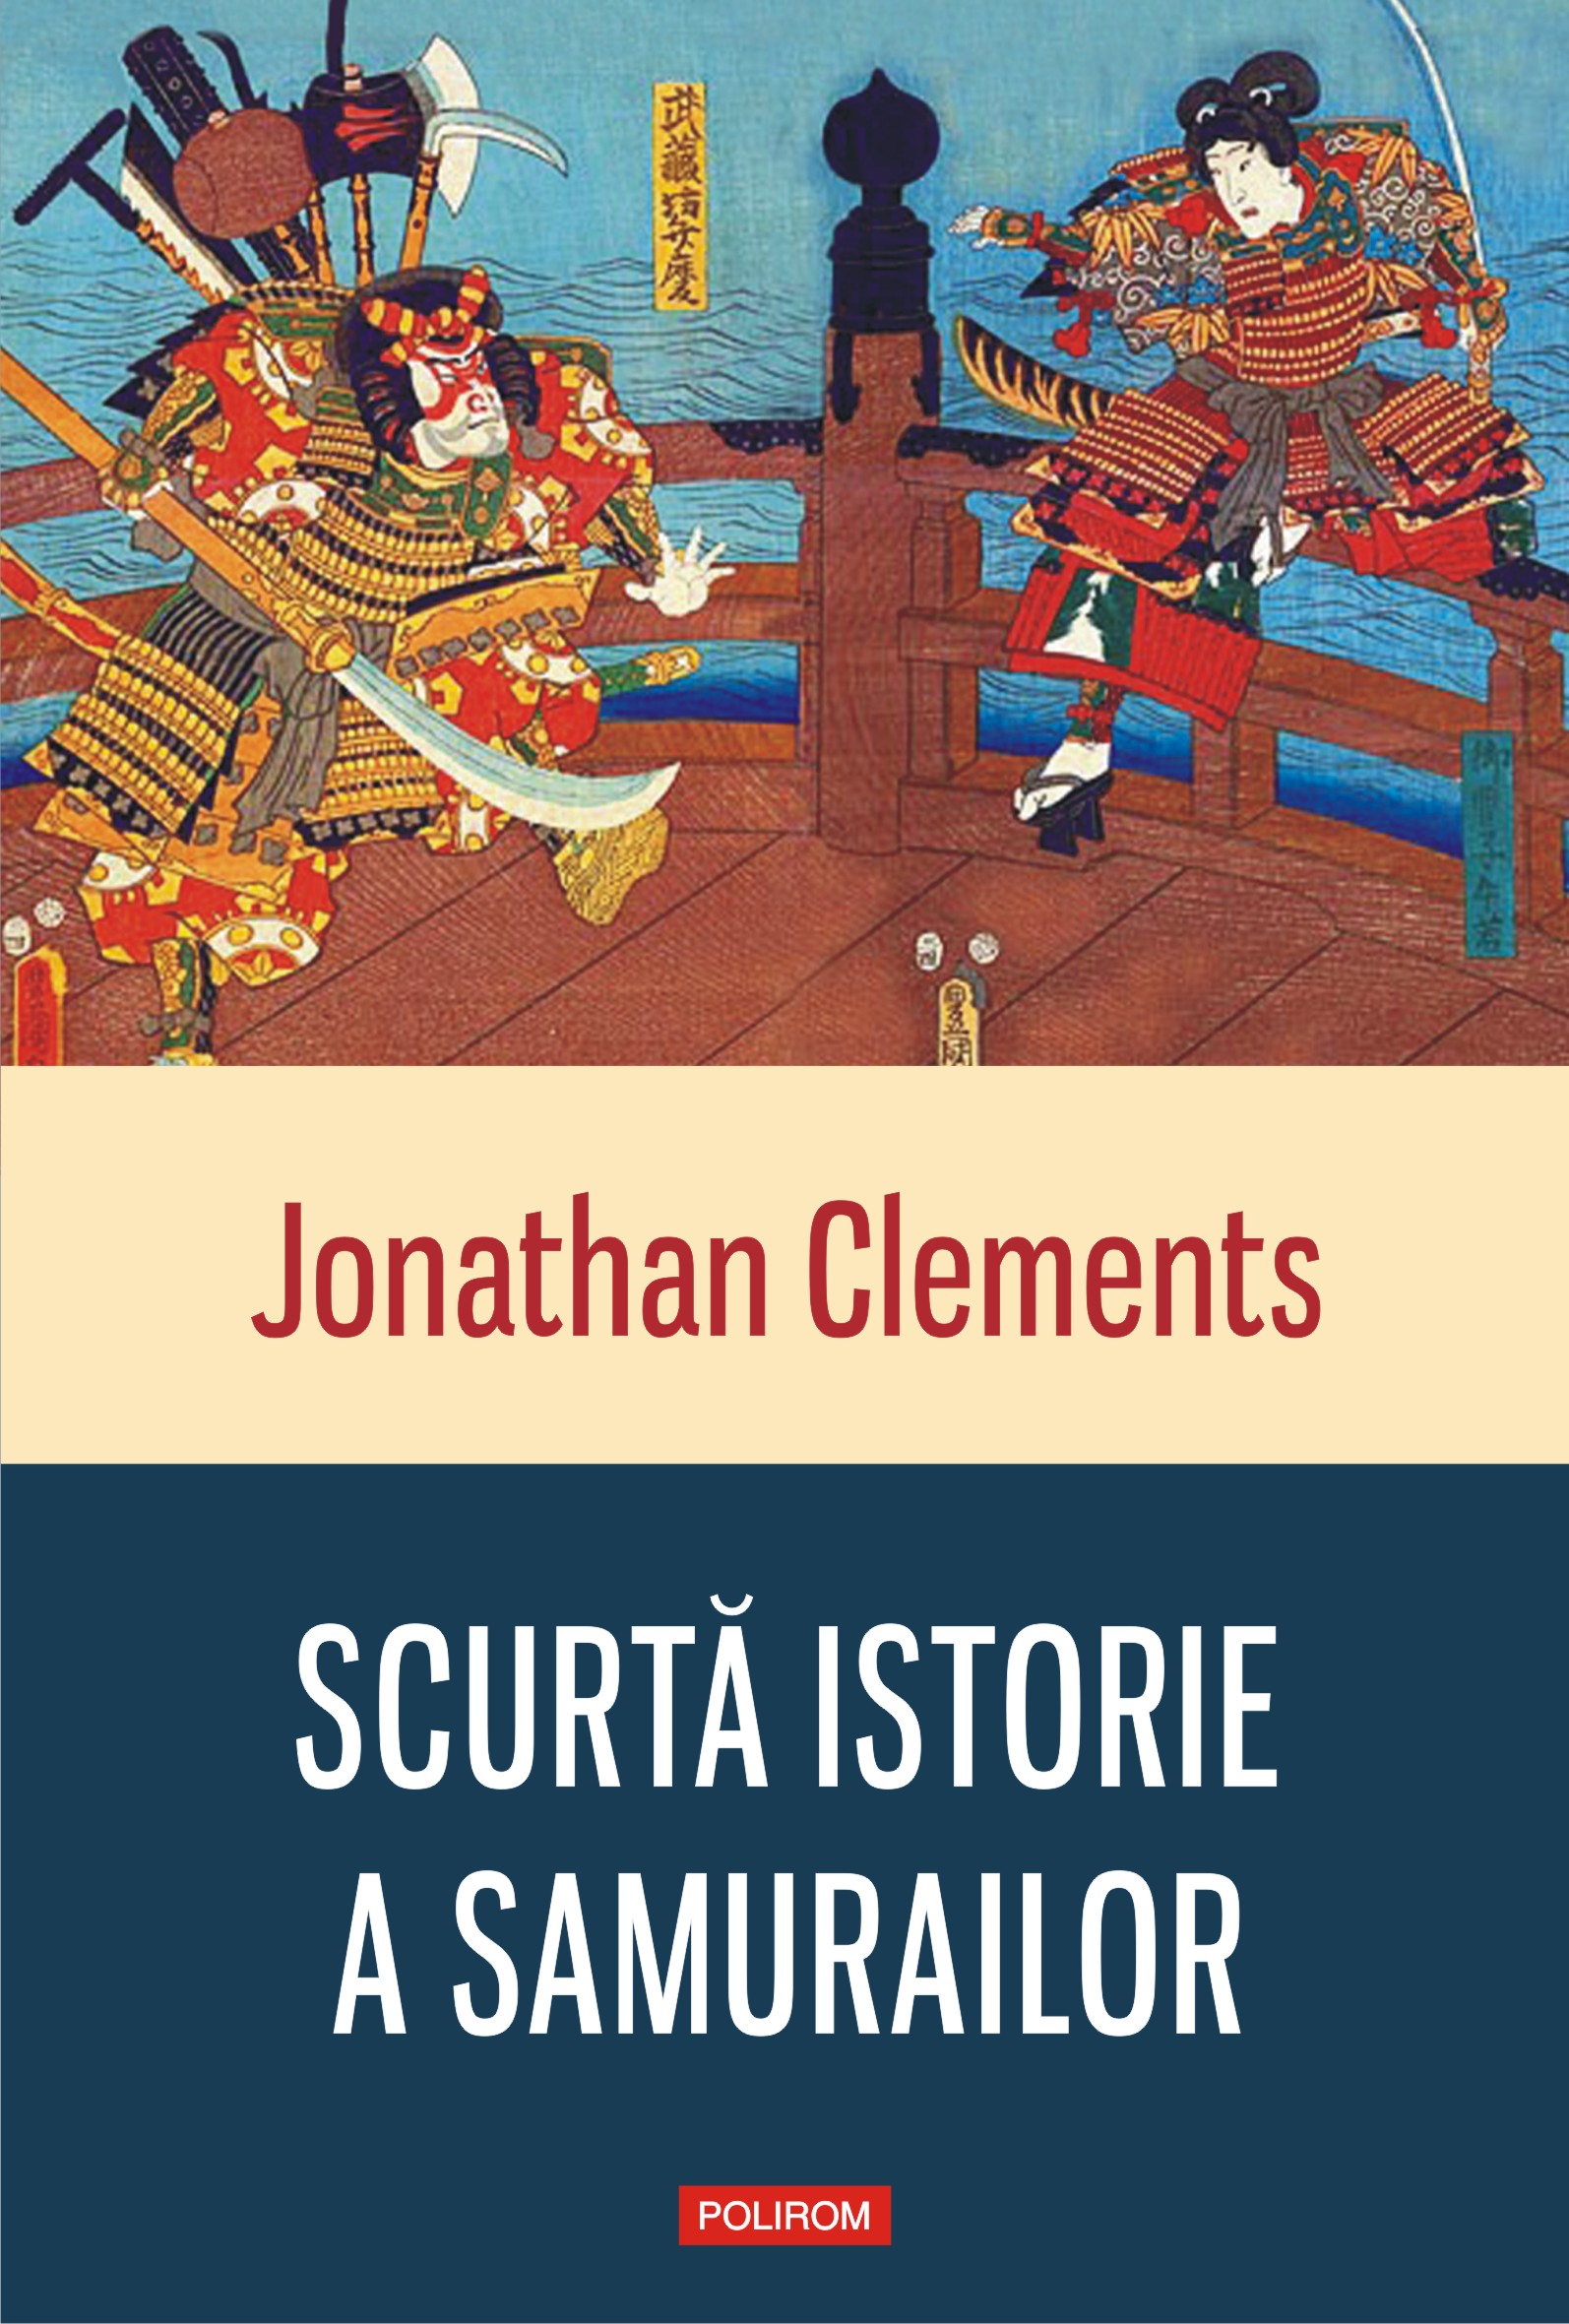 eBook Scurta istorie a samurailor - Jonathan Clements